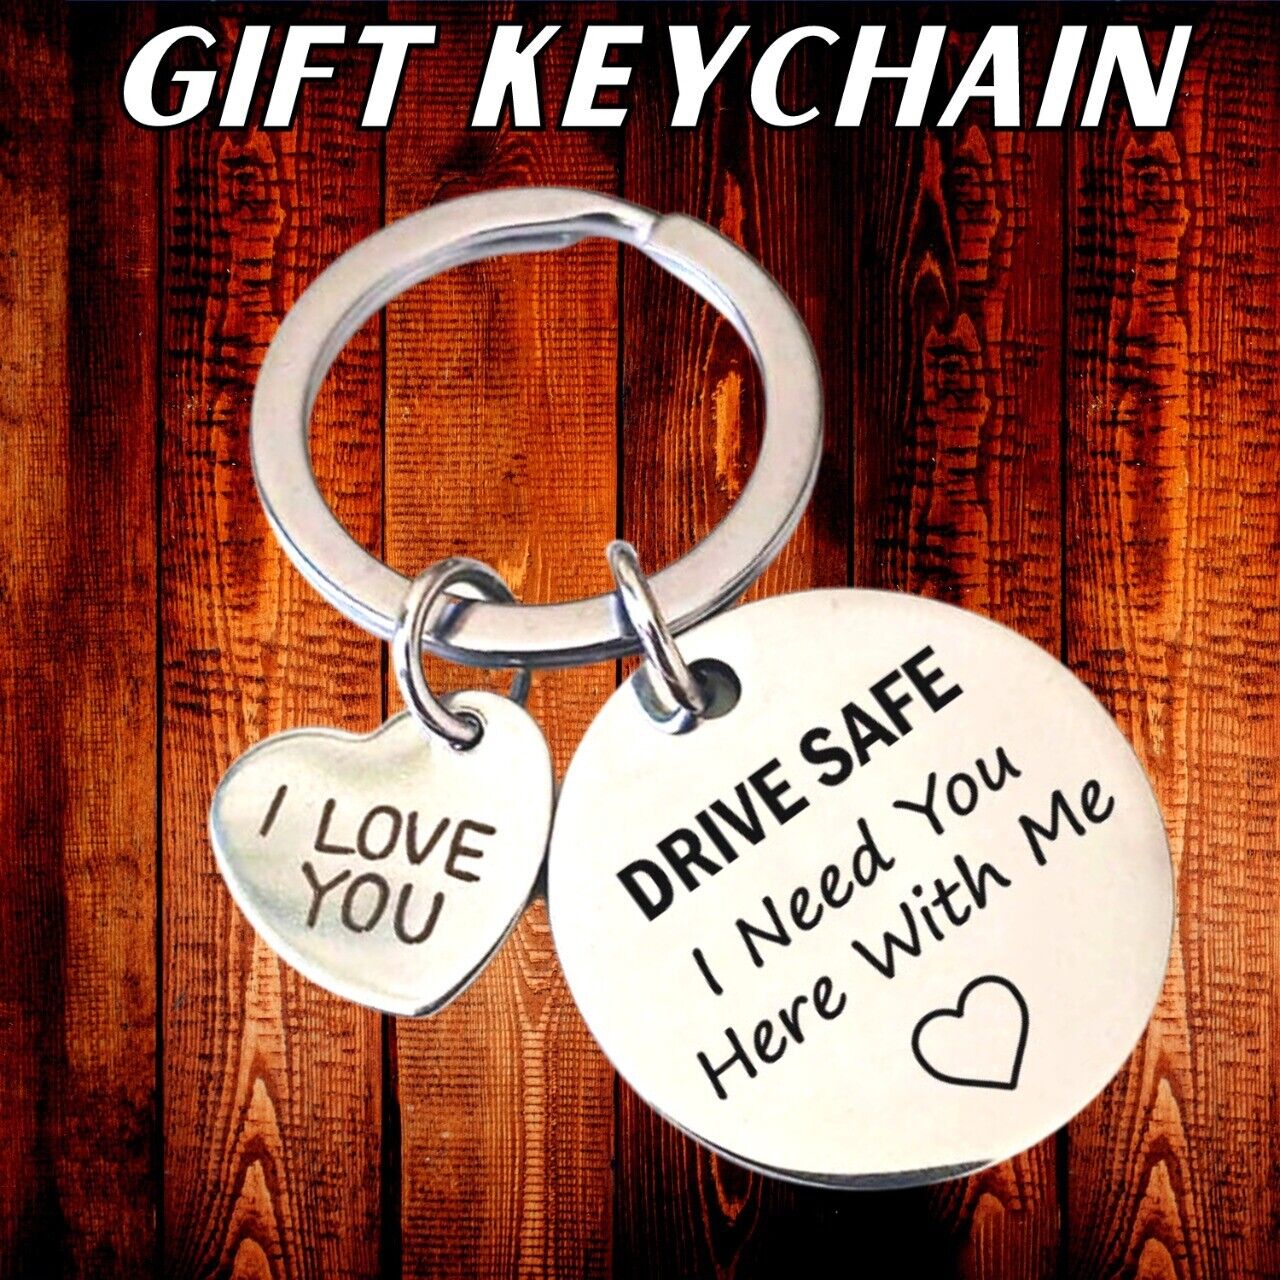 Couple's Keychain Love (Drive Safe)